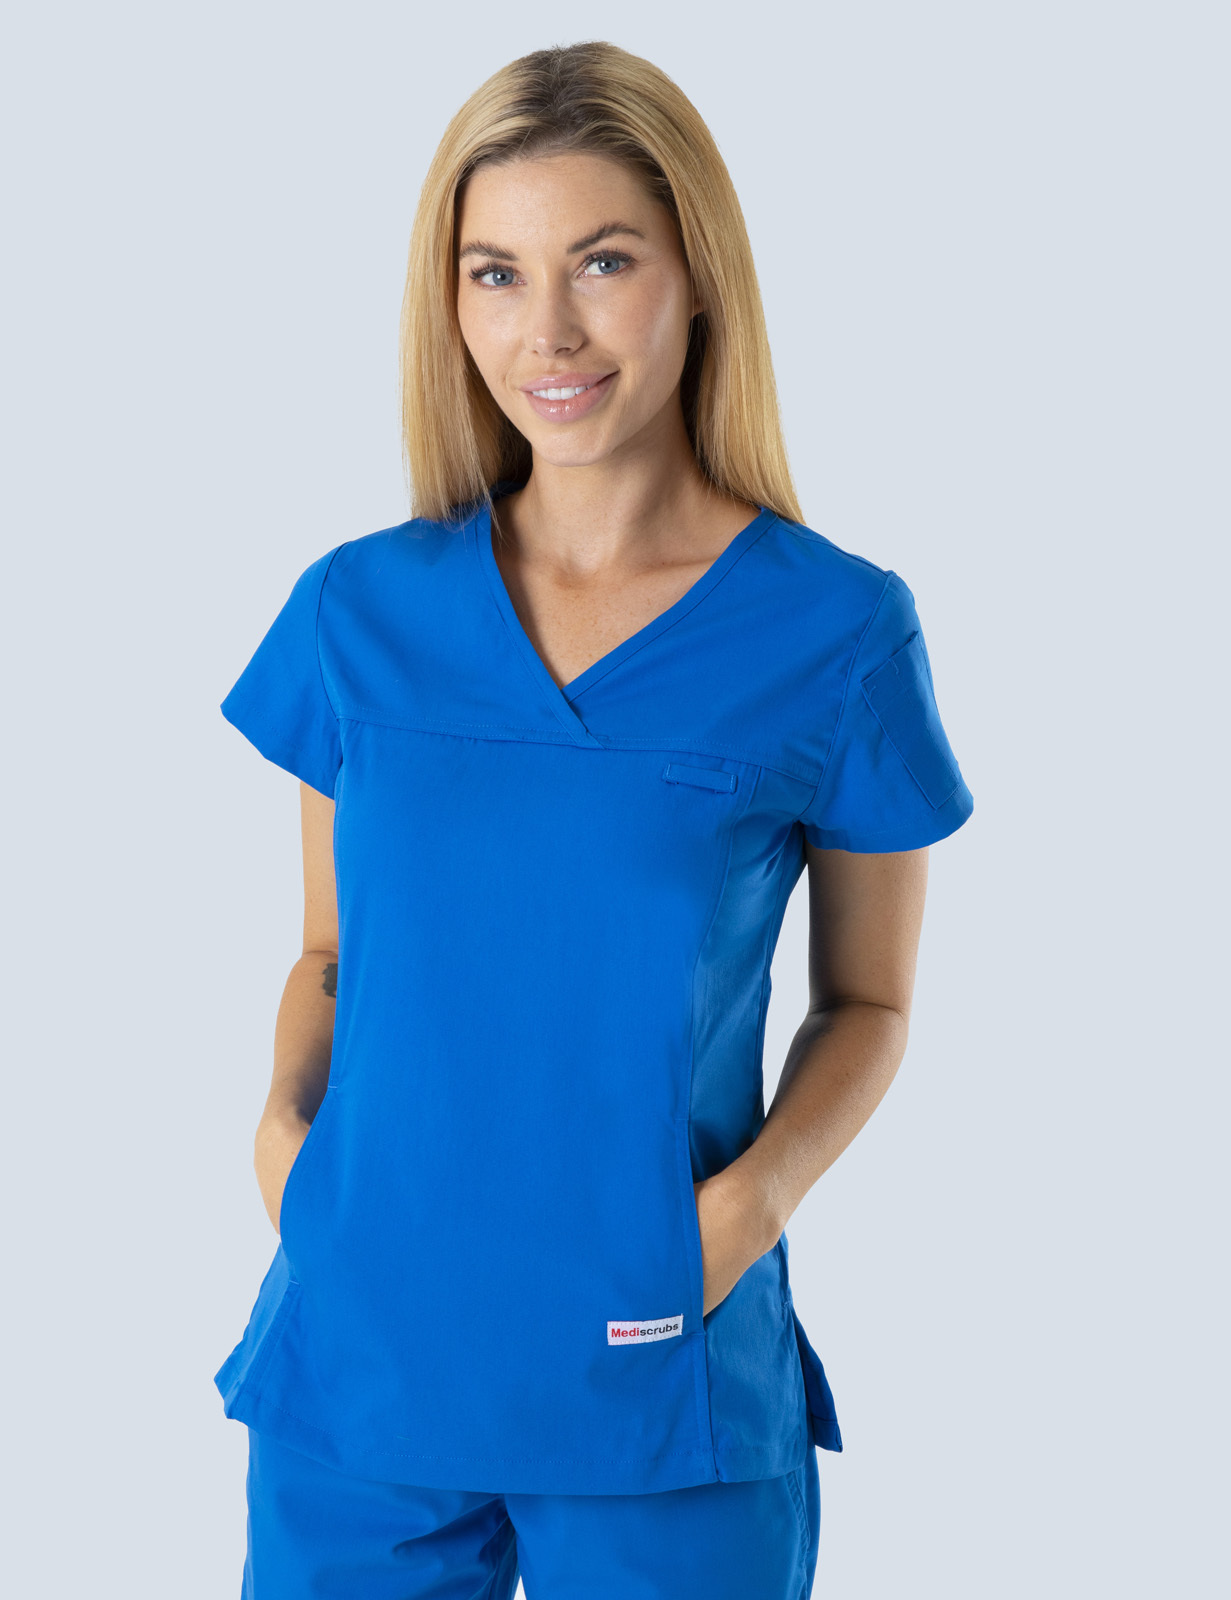 Queensland Children's Hospital Emergency Department Registrar Uniform Top Bundle  (Women's Fit Top in Royal  incl Logos)